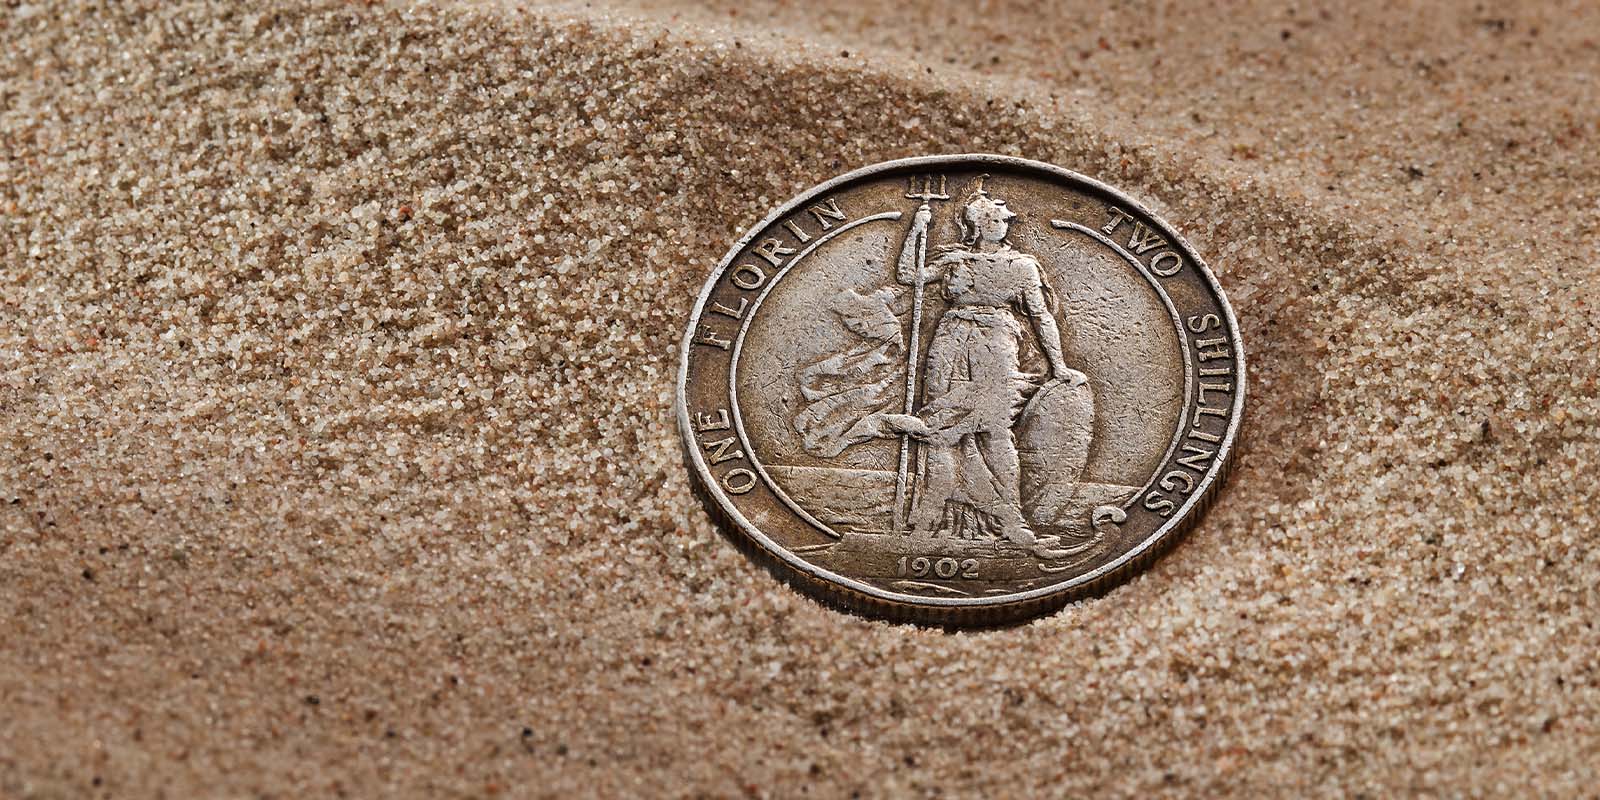 Britannia – the Icon on the Coin